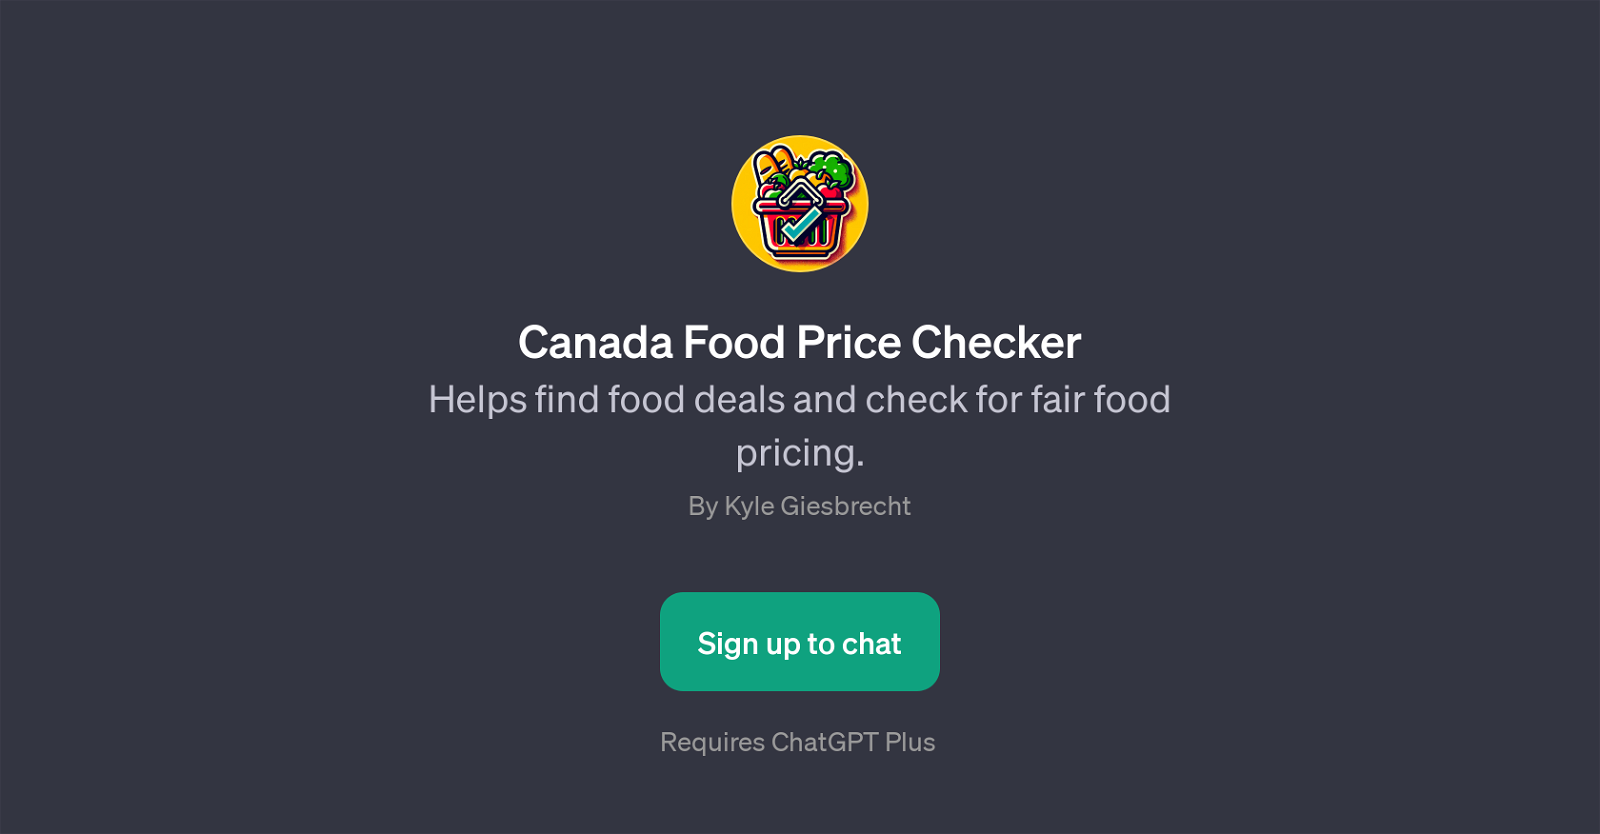 Canada Food Price Checker website